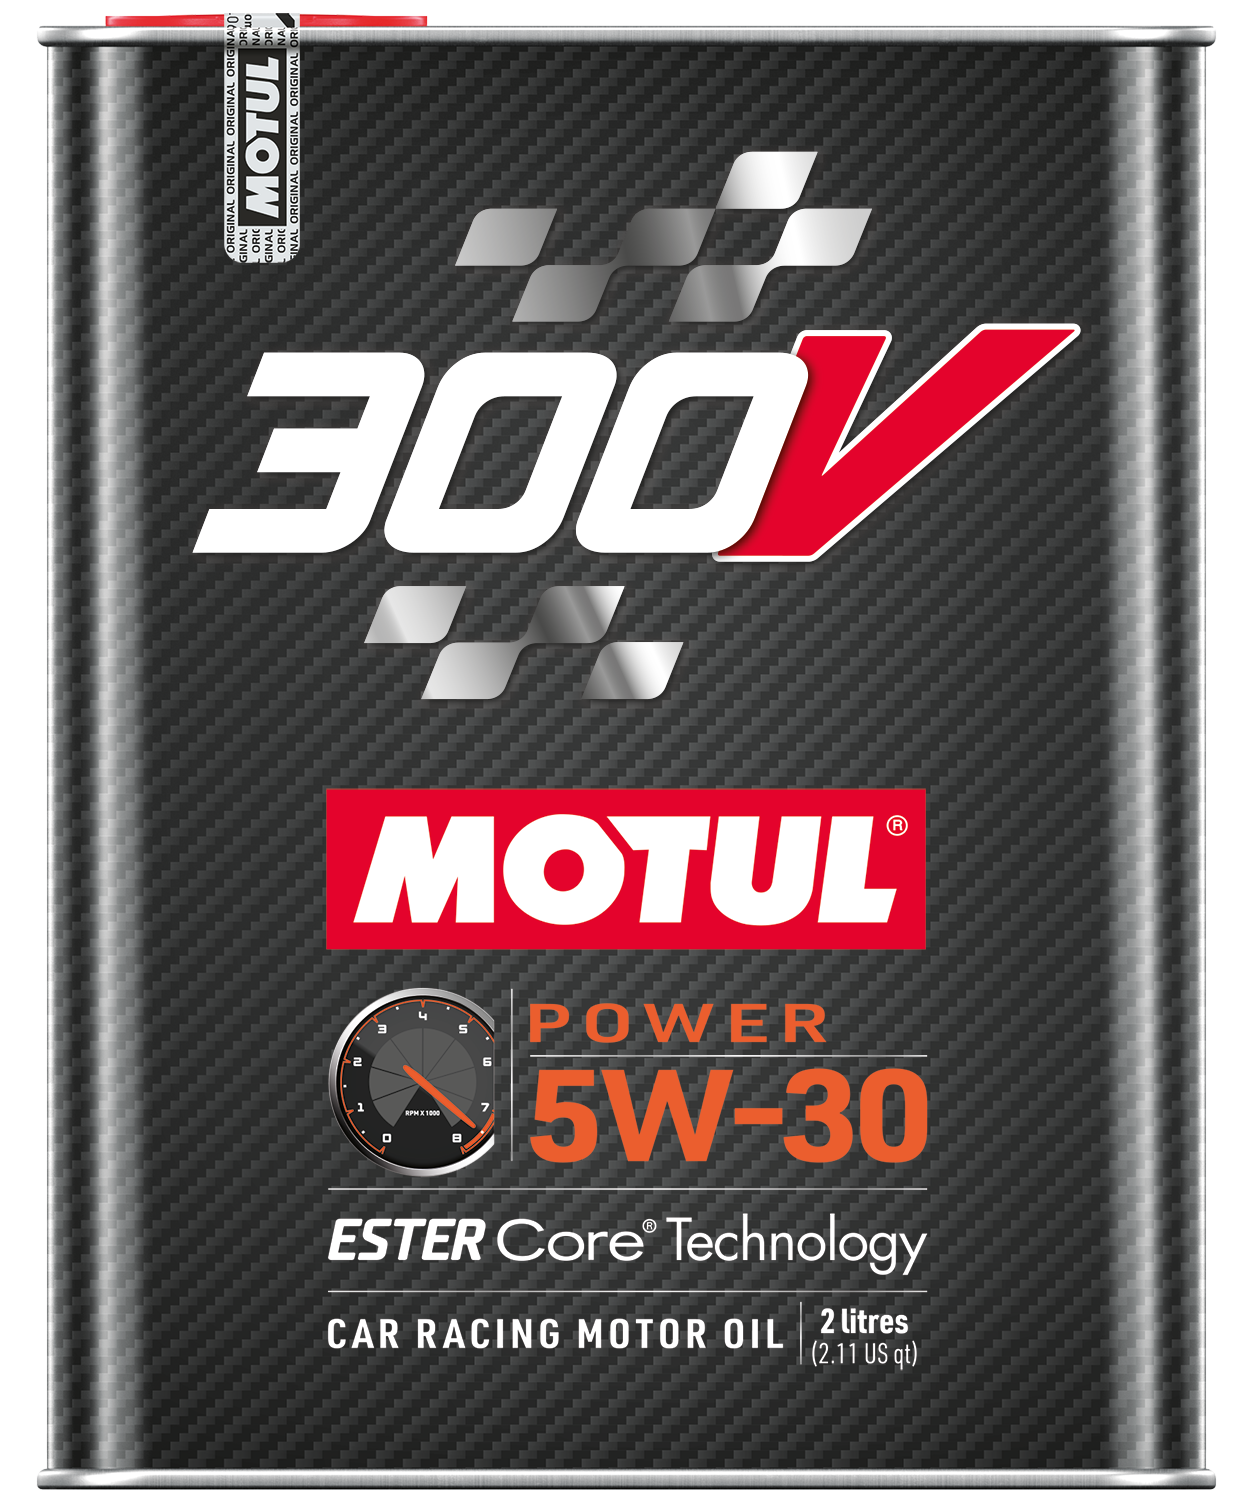 Моторное масло 300V Power 5w30 (2л.)